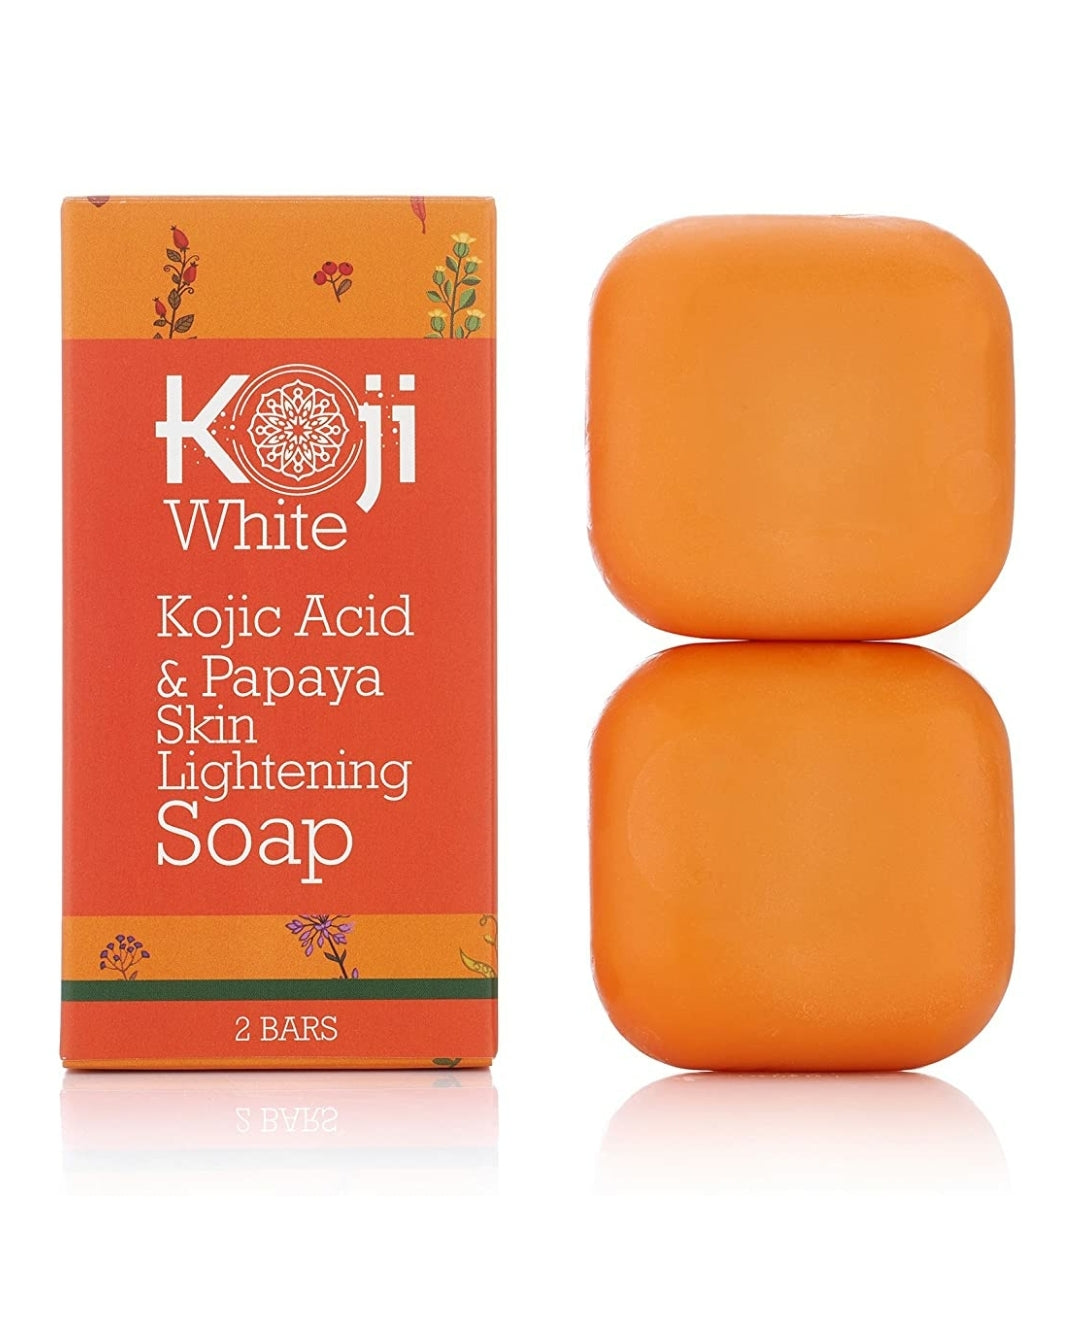 Kojic Acid & Papaya Whitening Soap